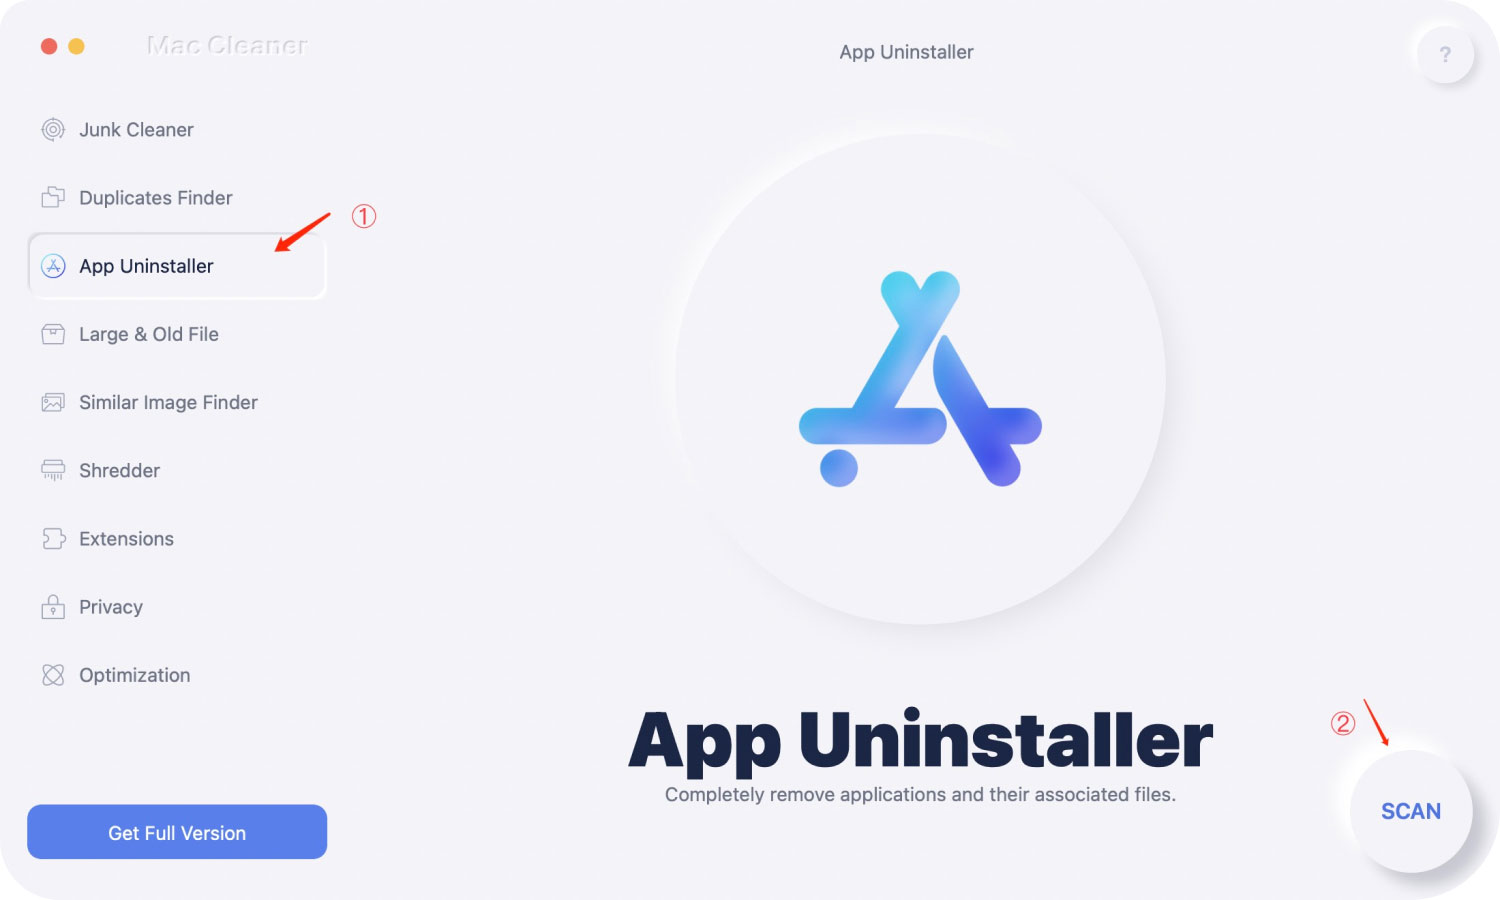 Select App Uninstaller